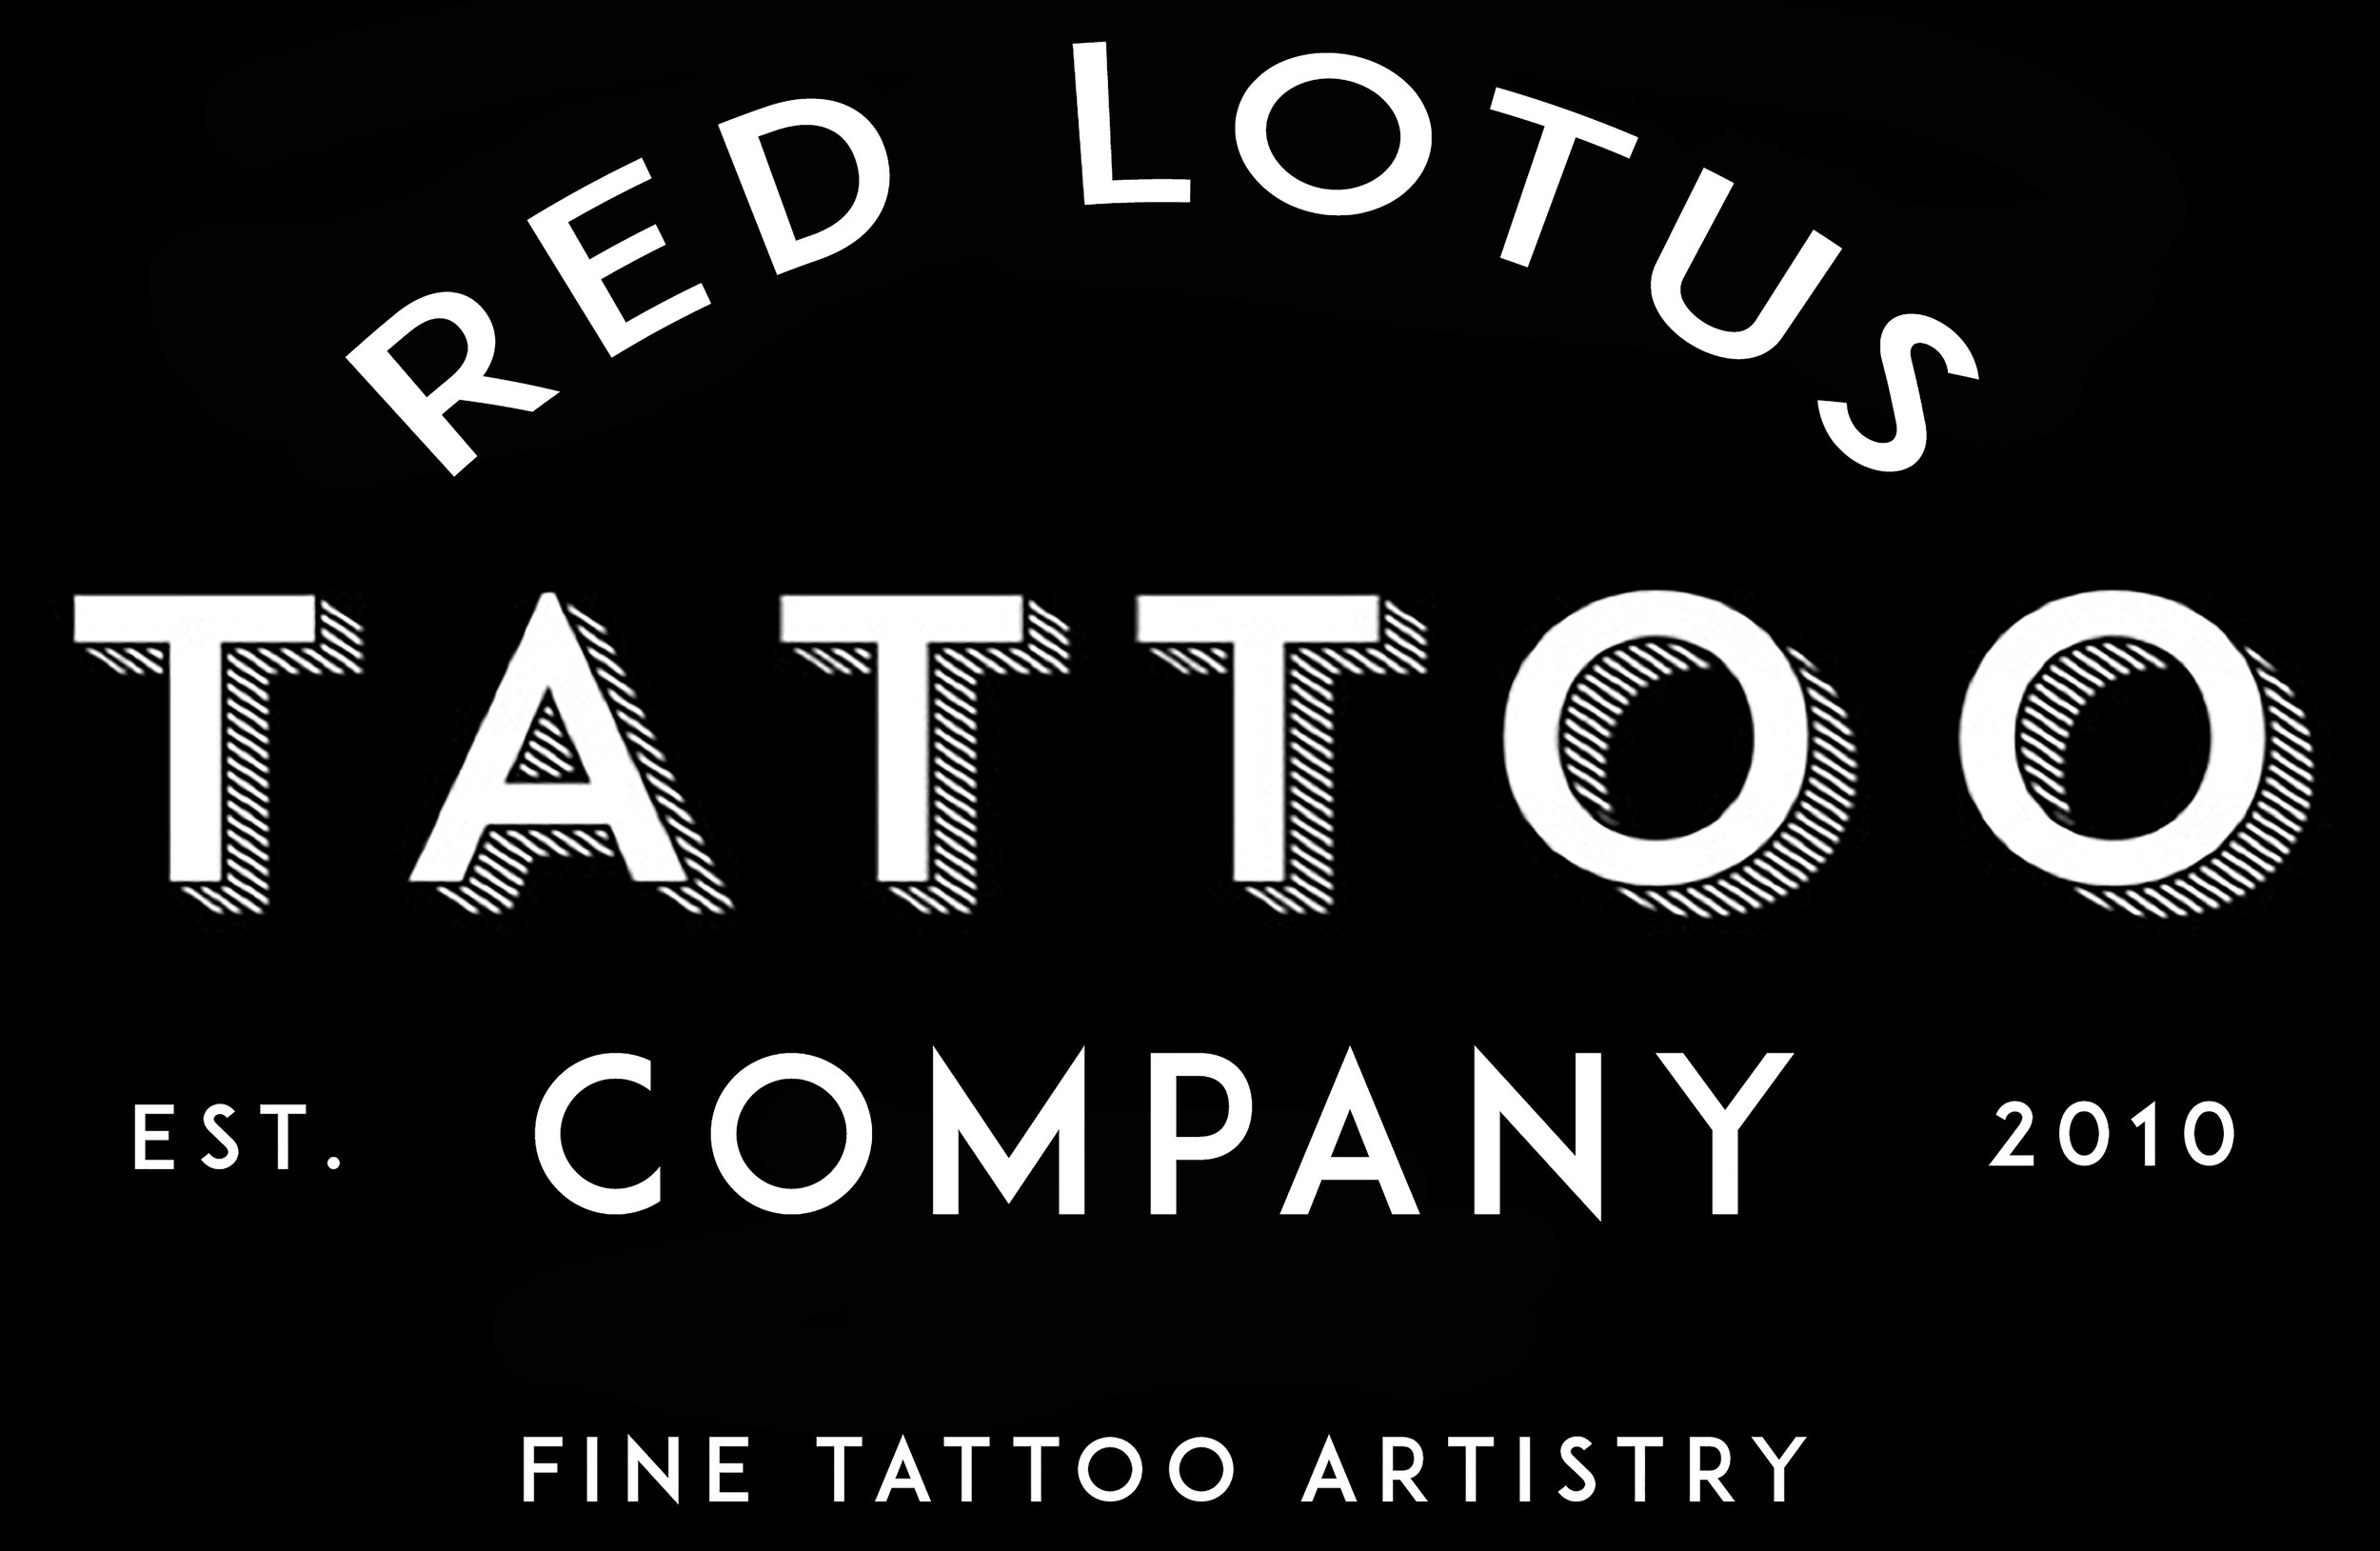 Red Lotus Tattoo Company, Custom Tattoo Studio